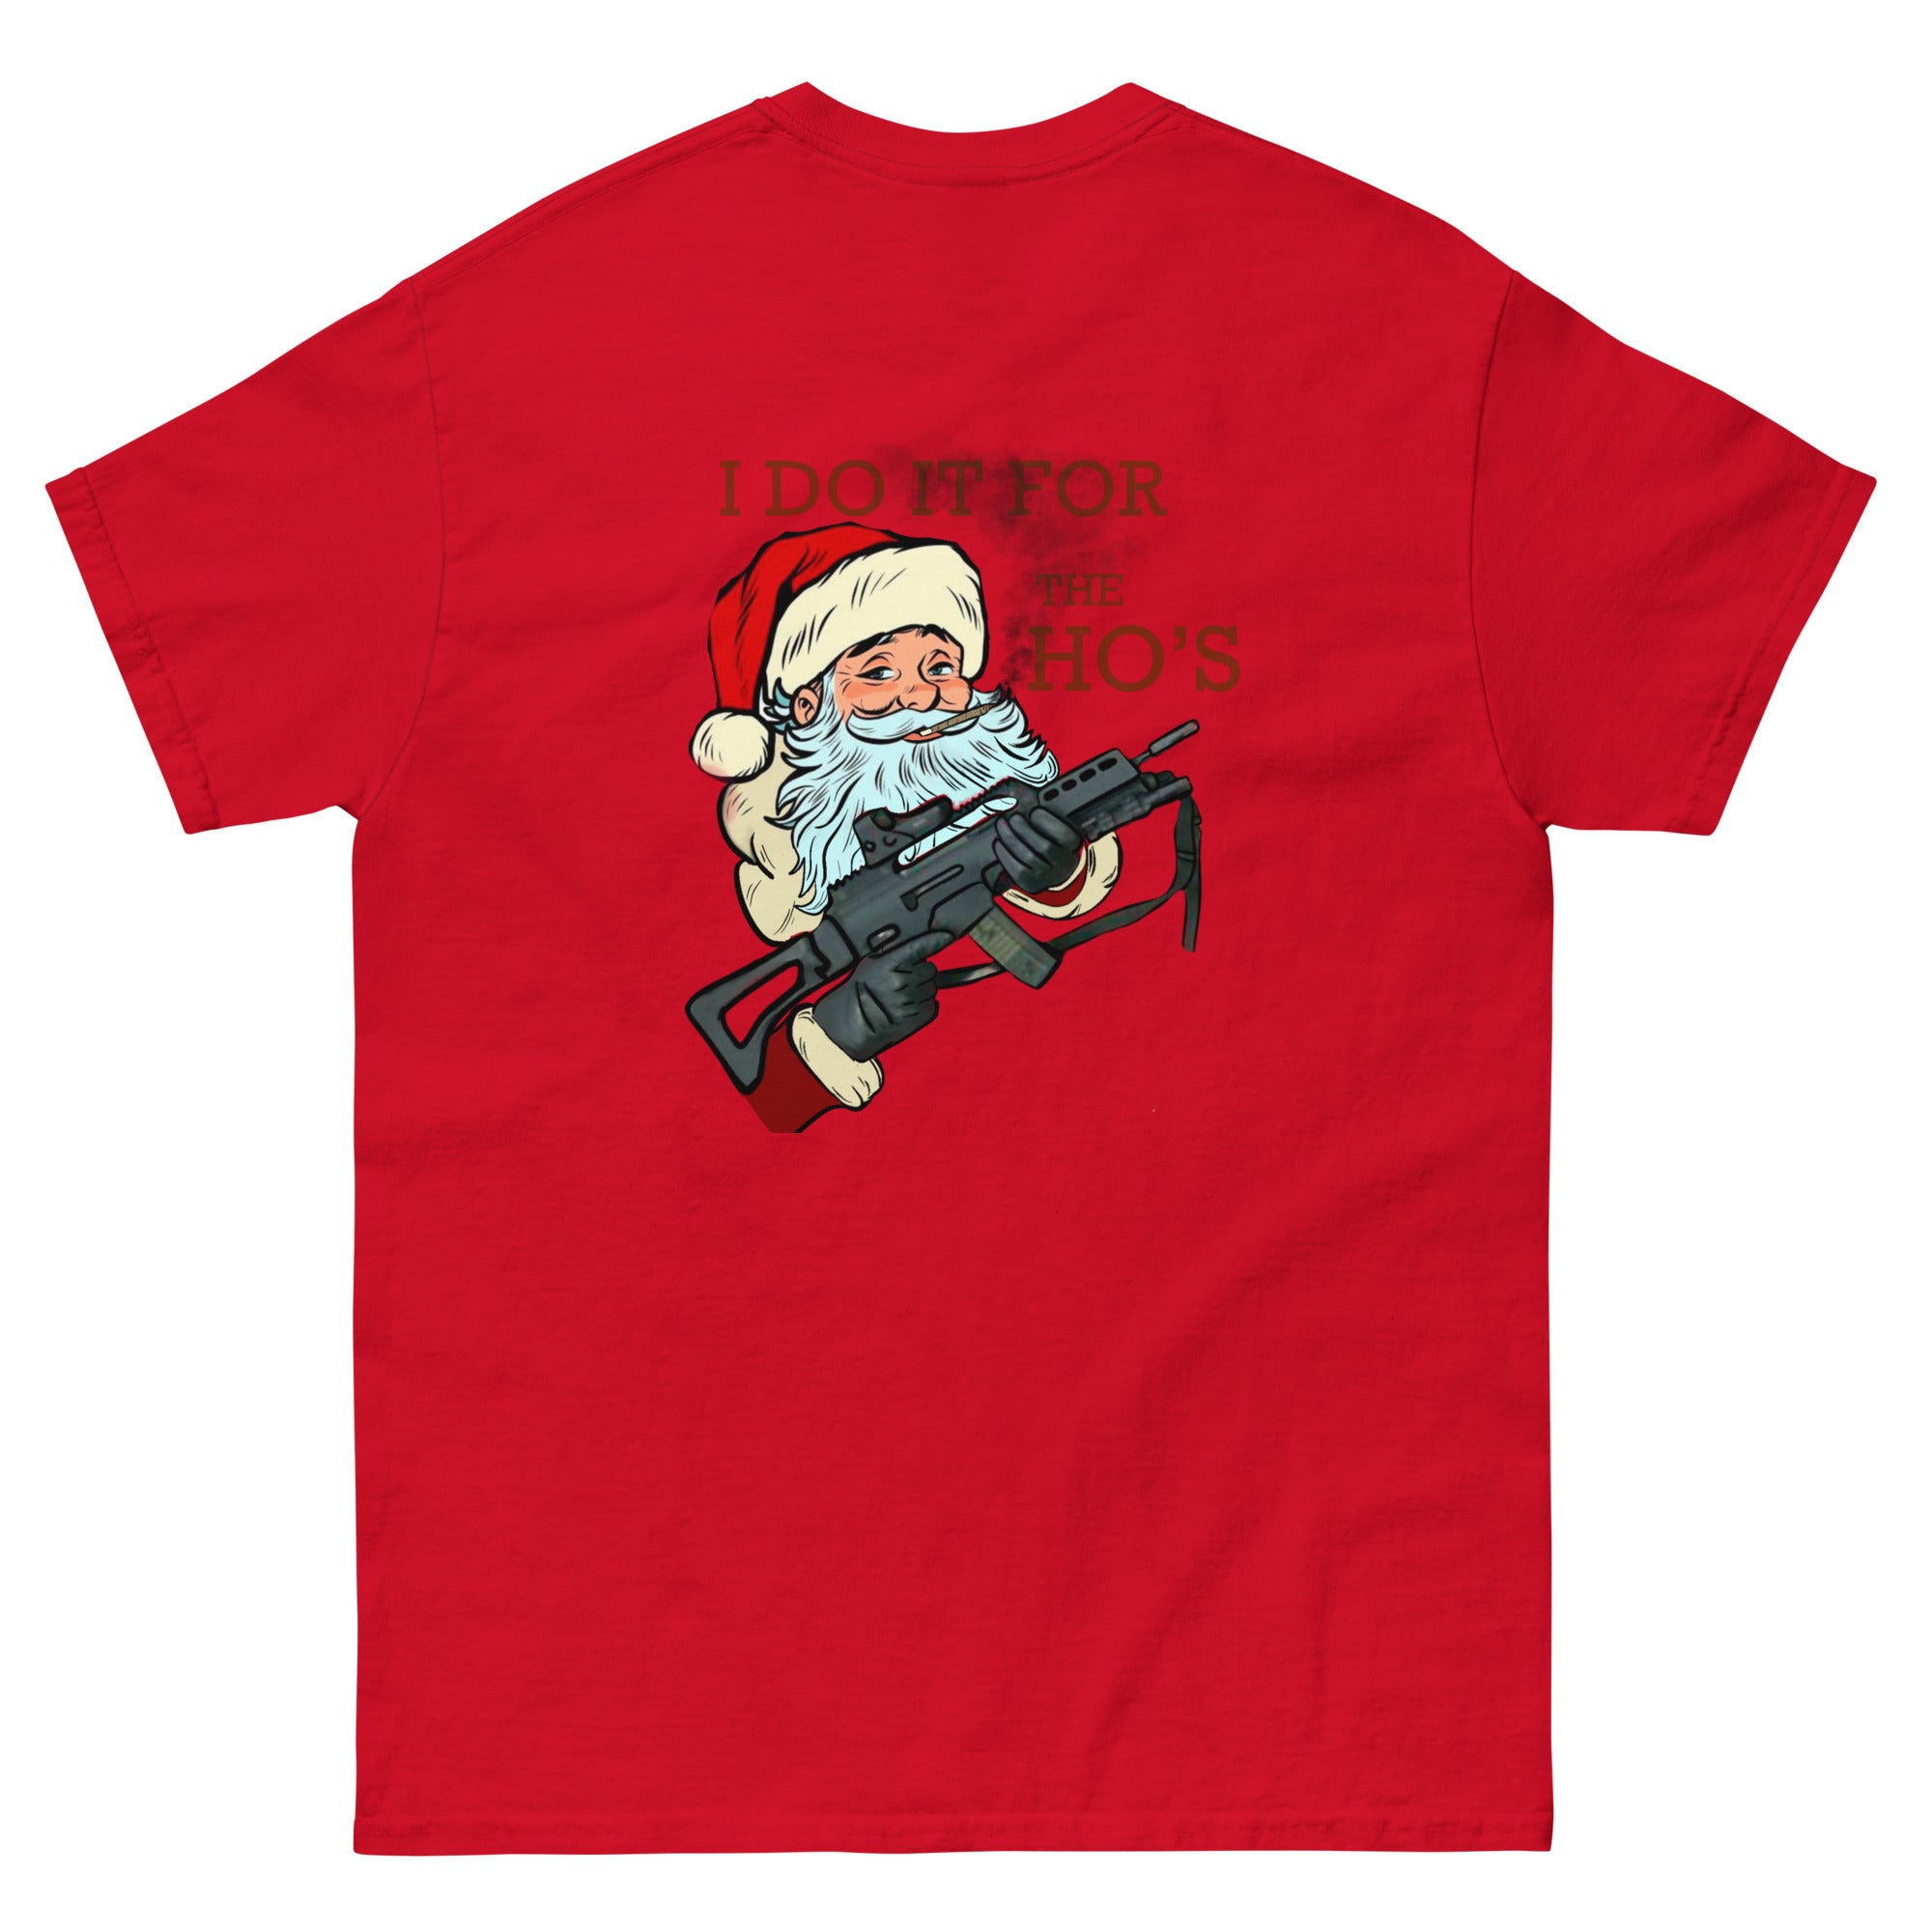 Santa’s Ho's Tee - Official Trucks